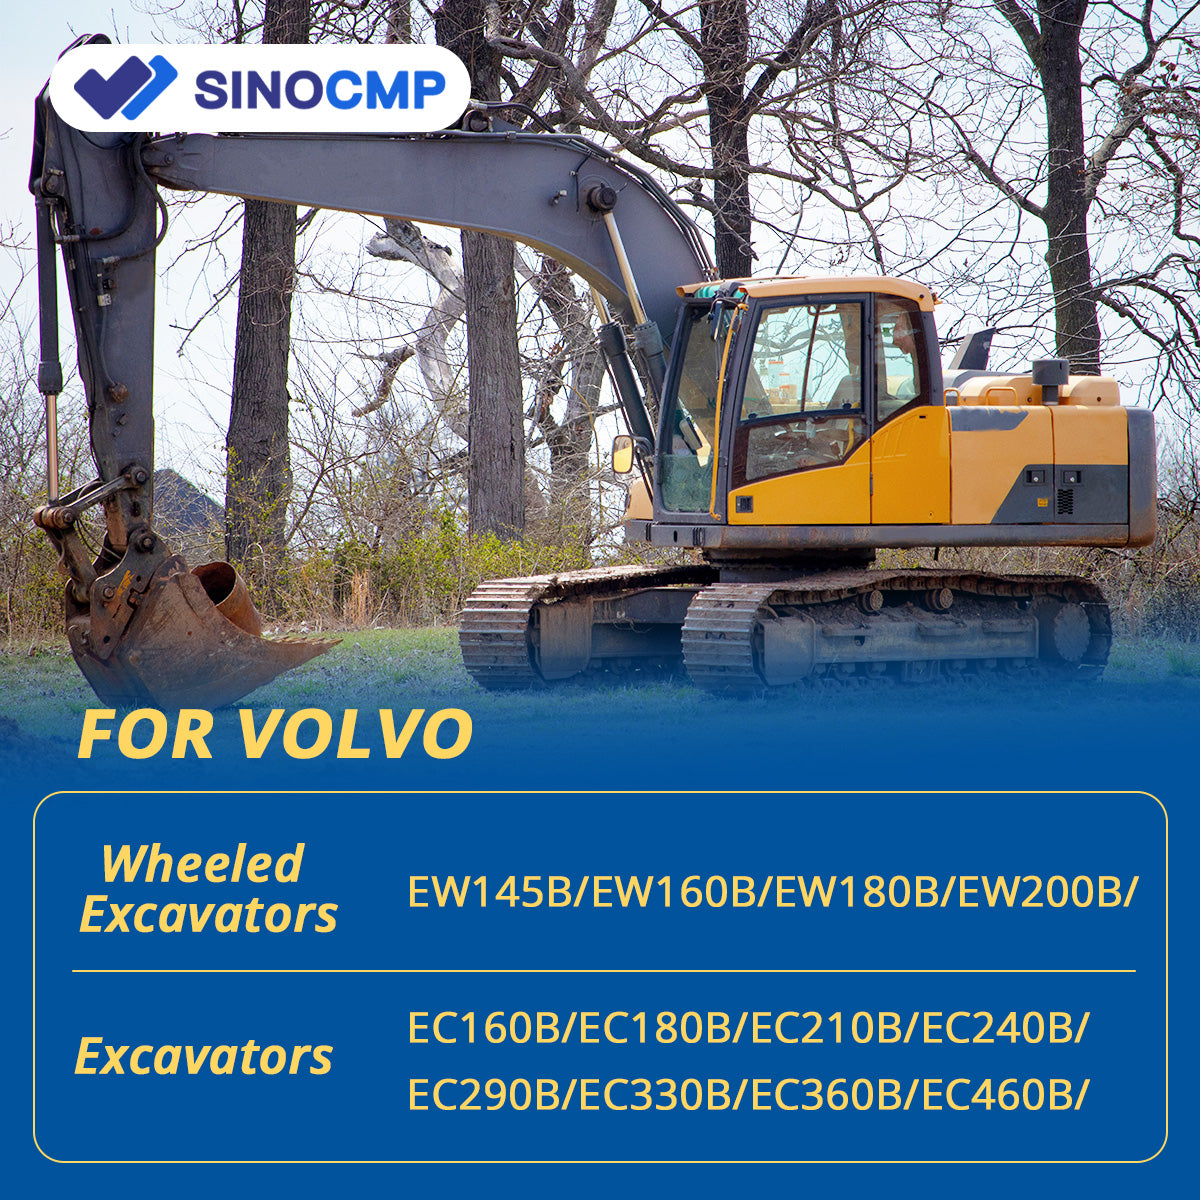 20577135 VOE20577135 ECU Controller for Volvo Wheeled Excavators and Excavators - Sinocmp